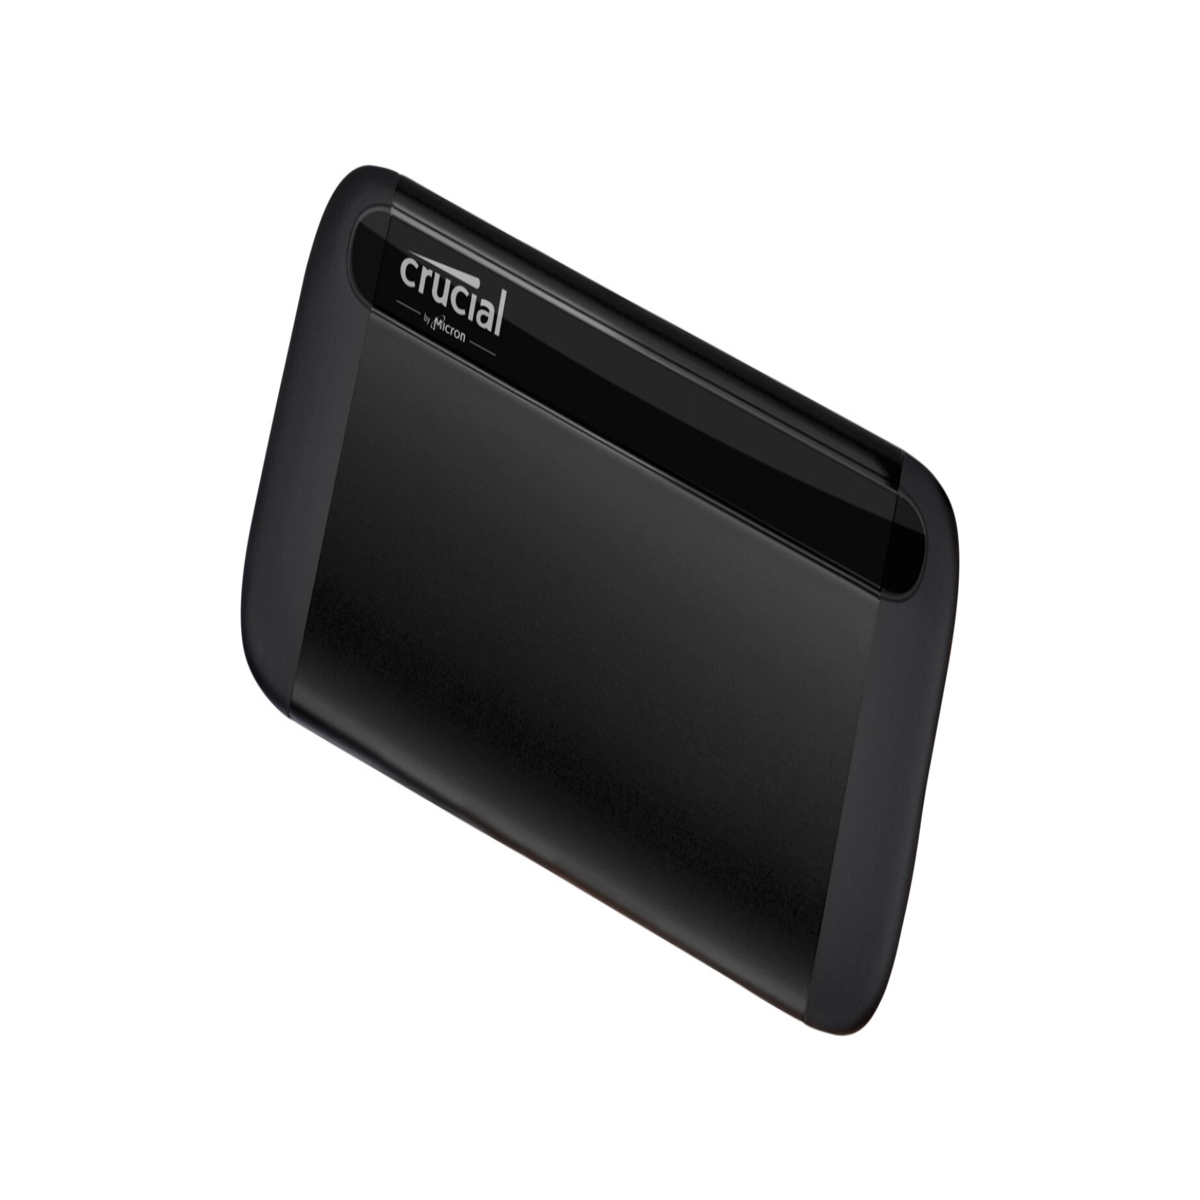 Promo SSD Crucial : le X8 1 To à 78 €, le 2 To à 123 €